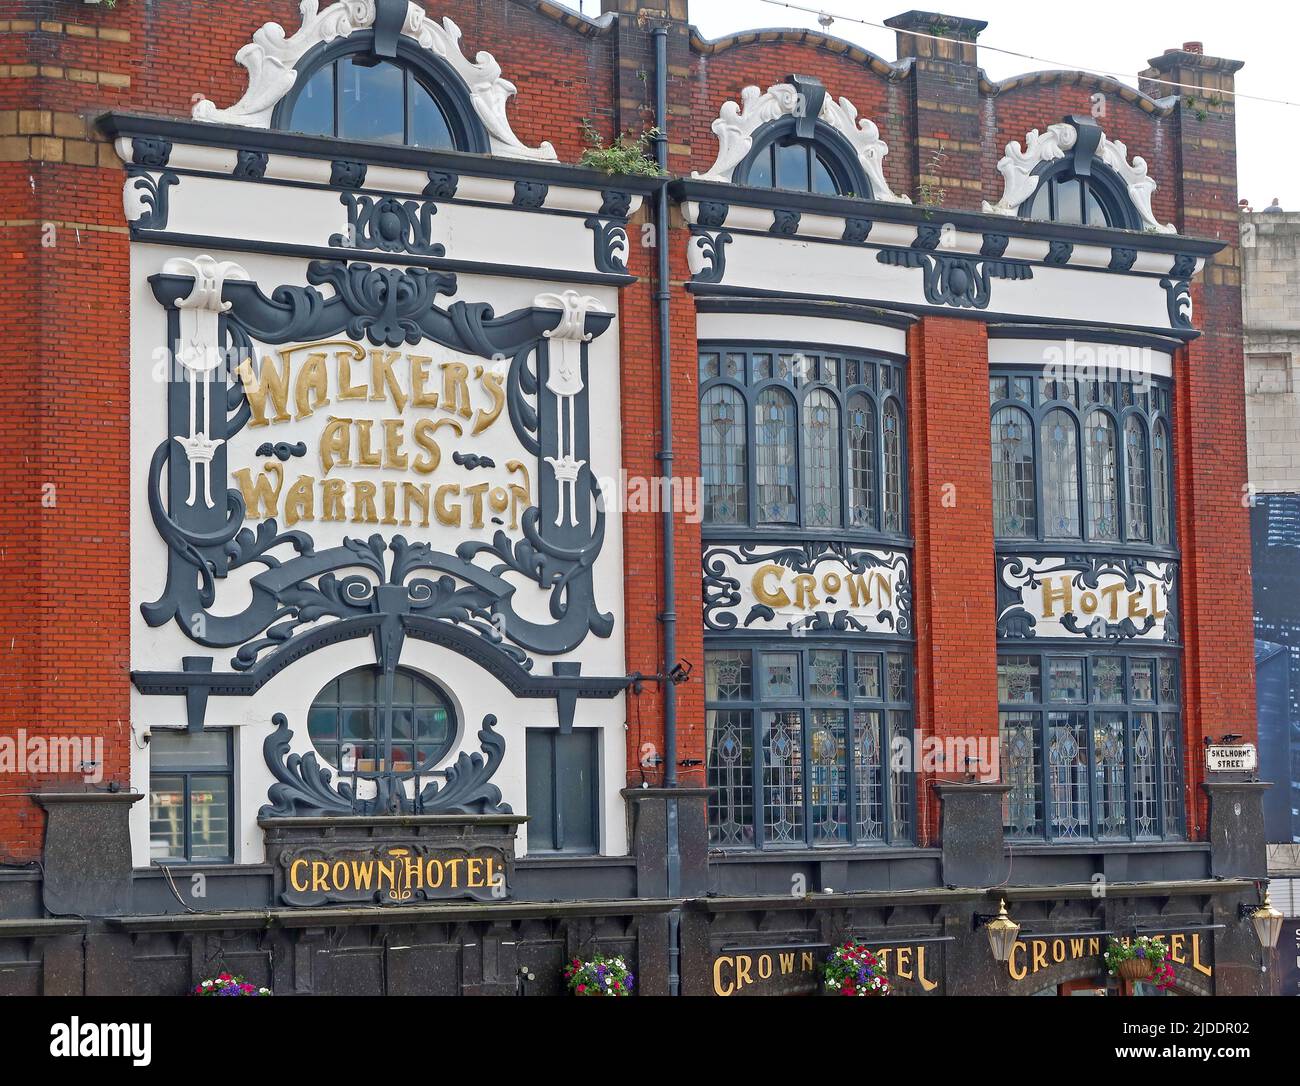 The Crown Hotel, Walkers Ales Warrington, 43 Lime Street, Liverpool, Merseyside, England, Großbritannien, L1 1JQ Stockfoto